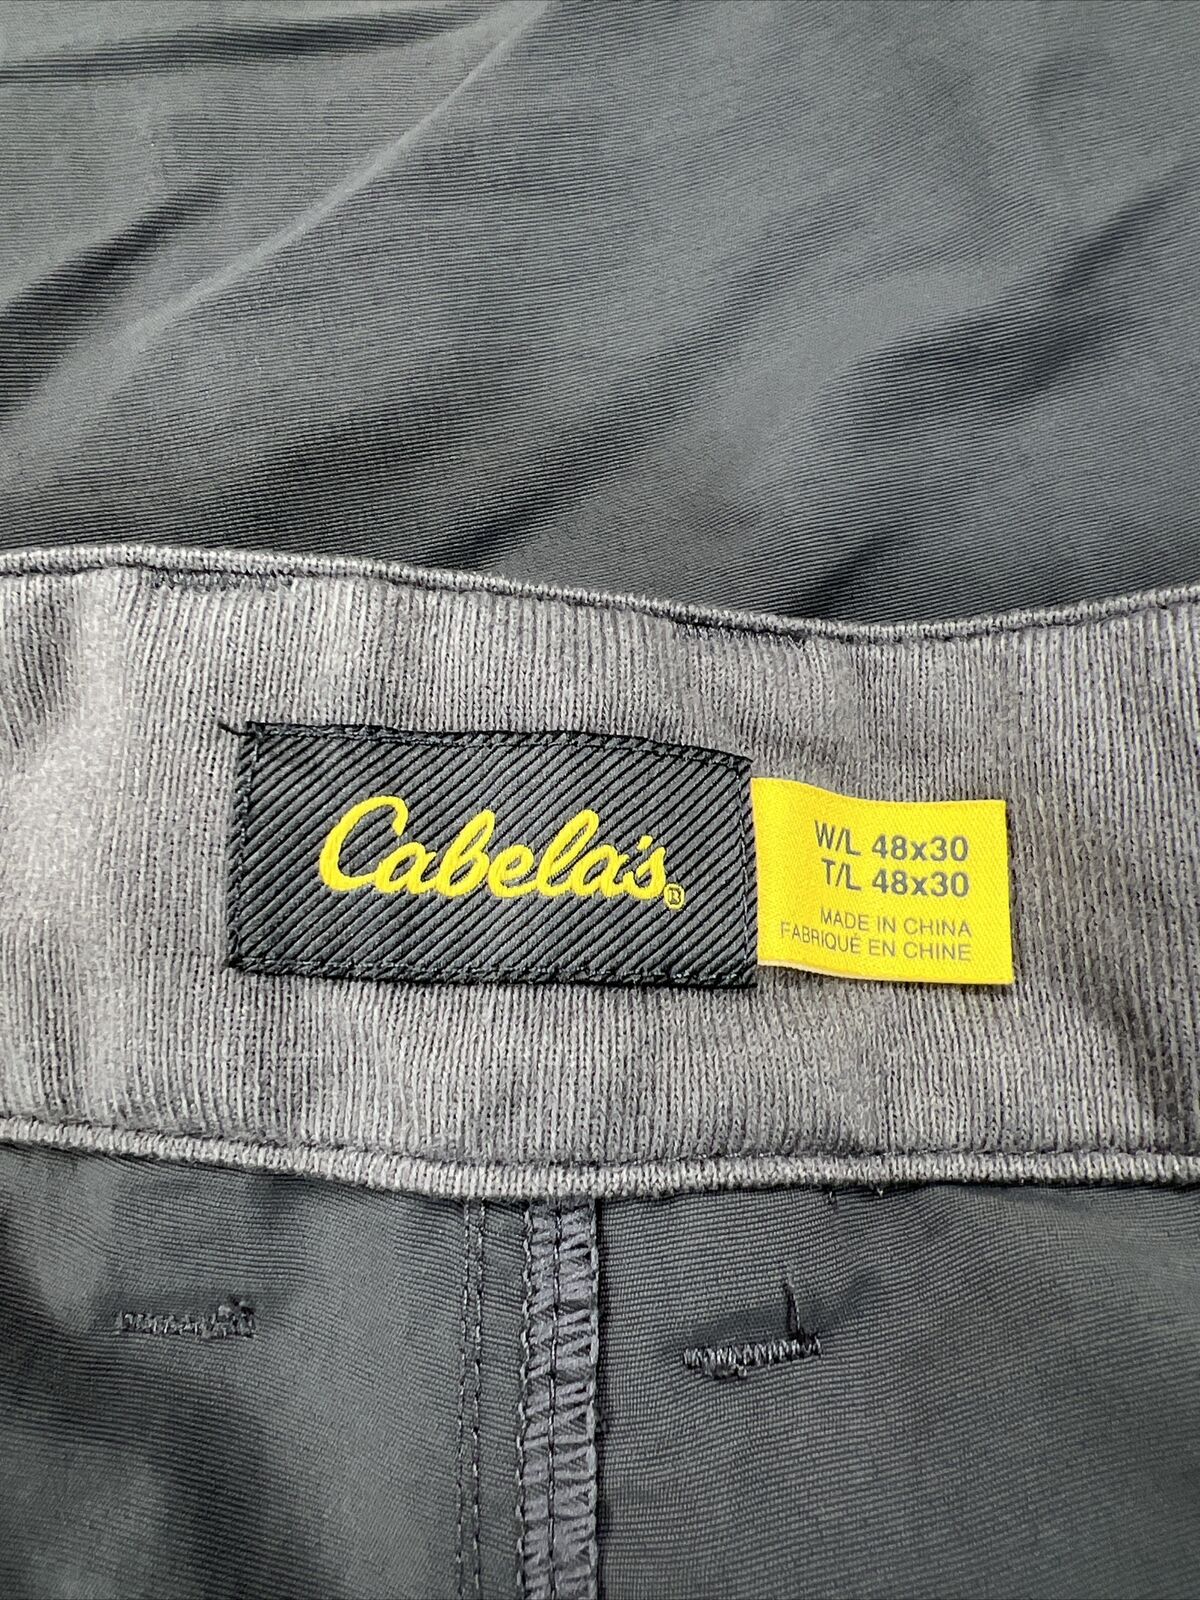 Cabela's Men's Gray Nylon Cargo Tech Pants - 48x30